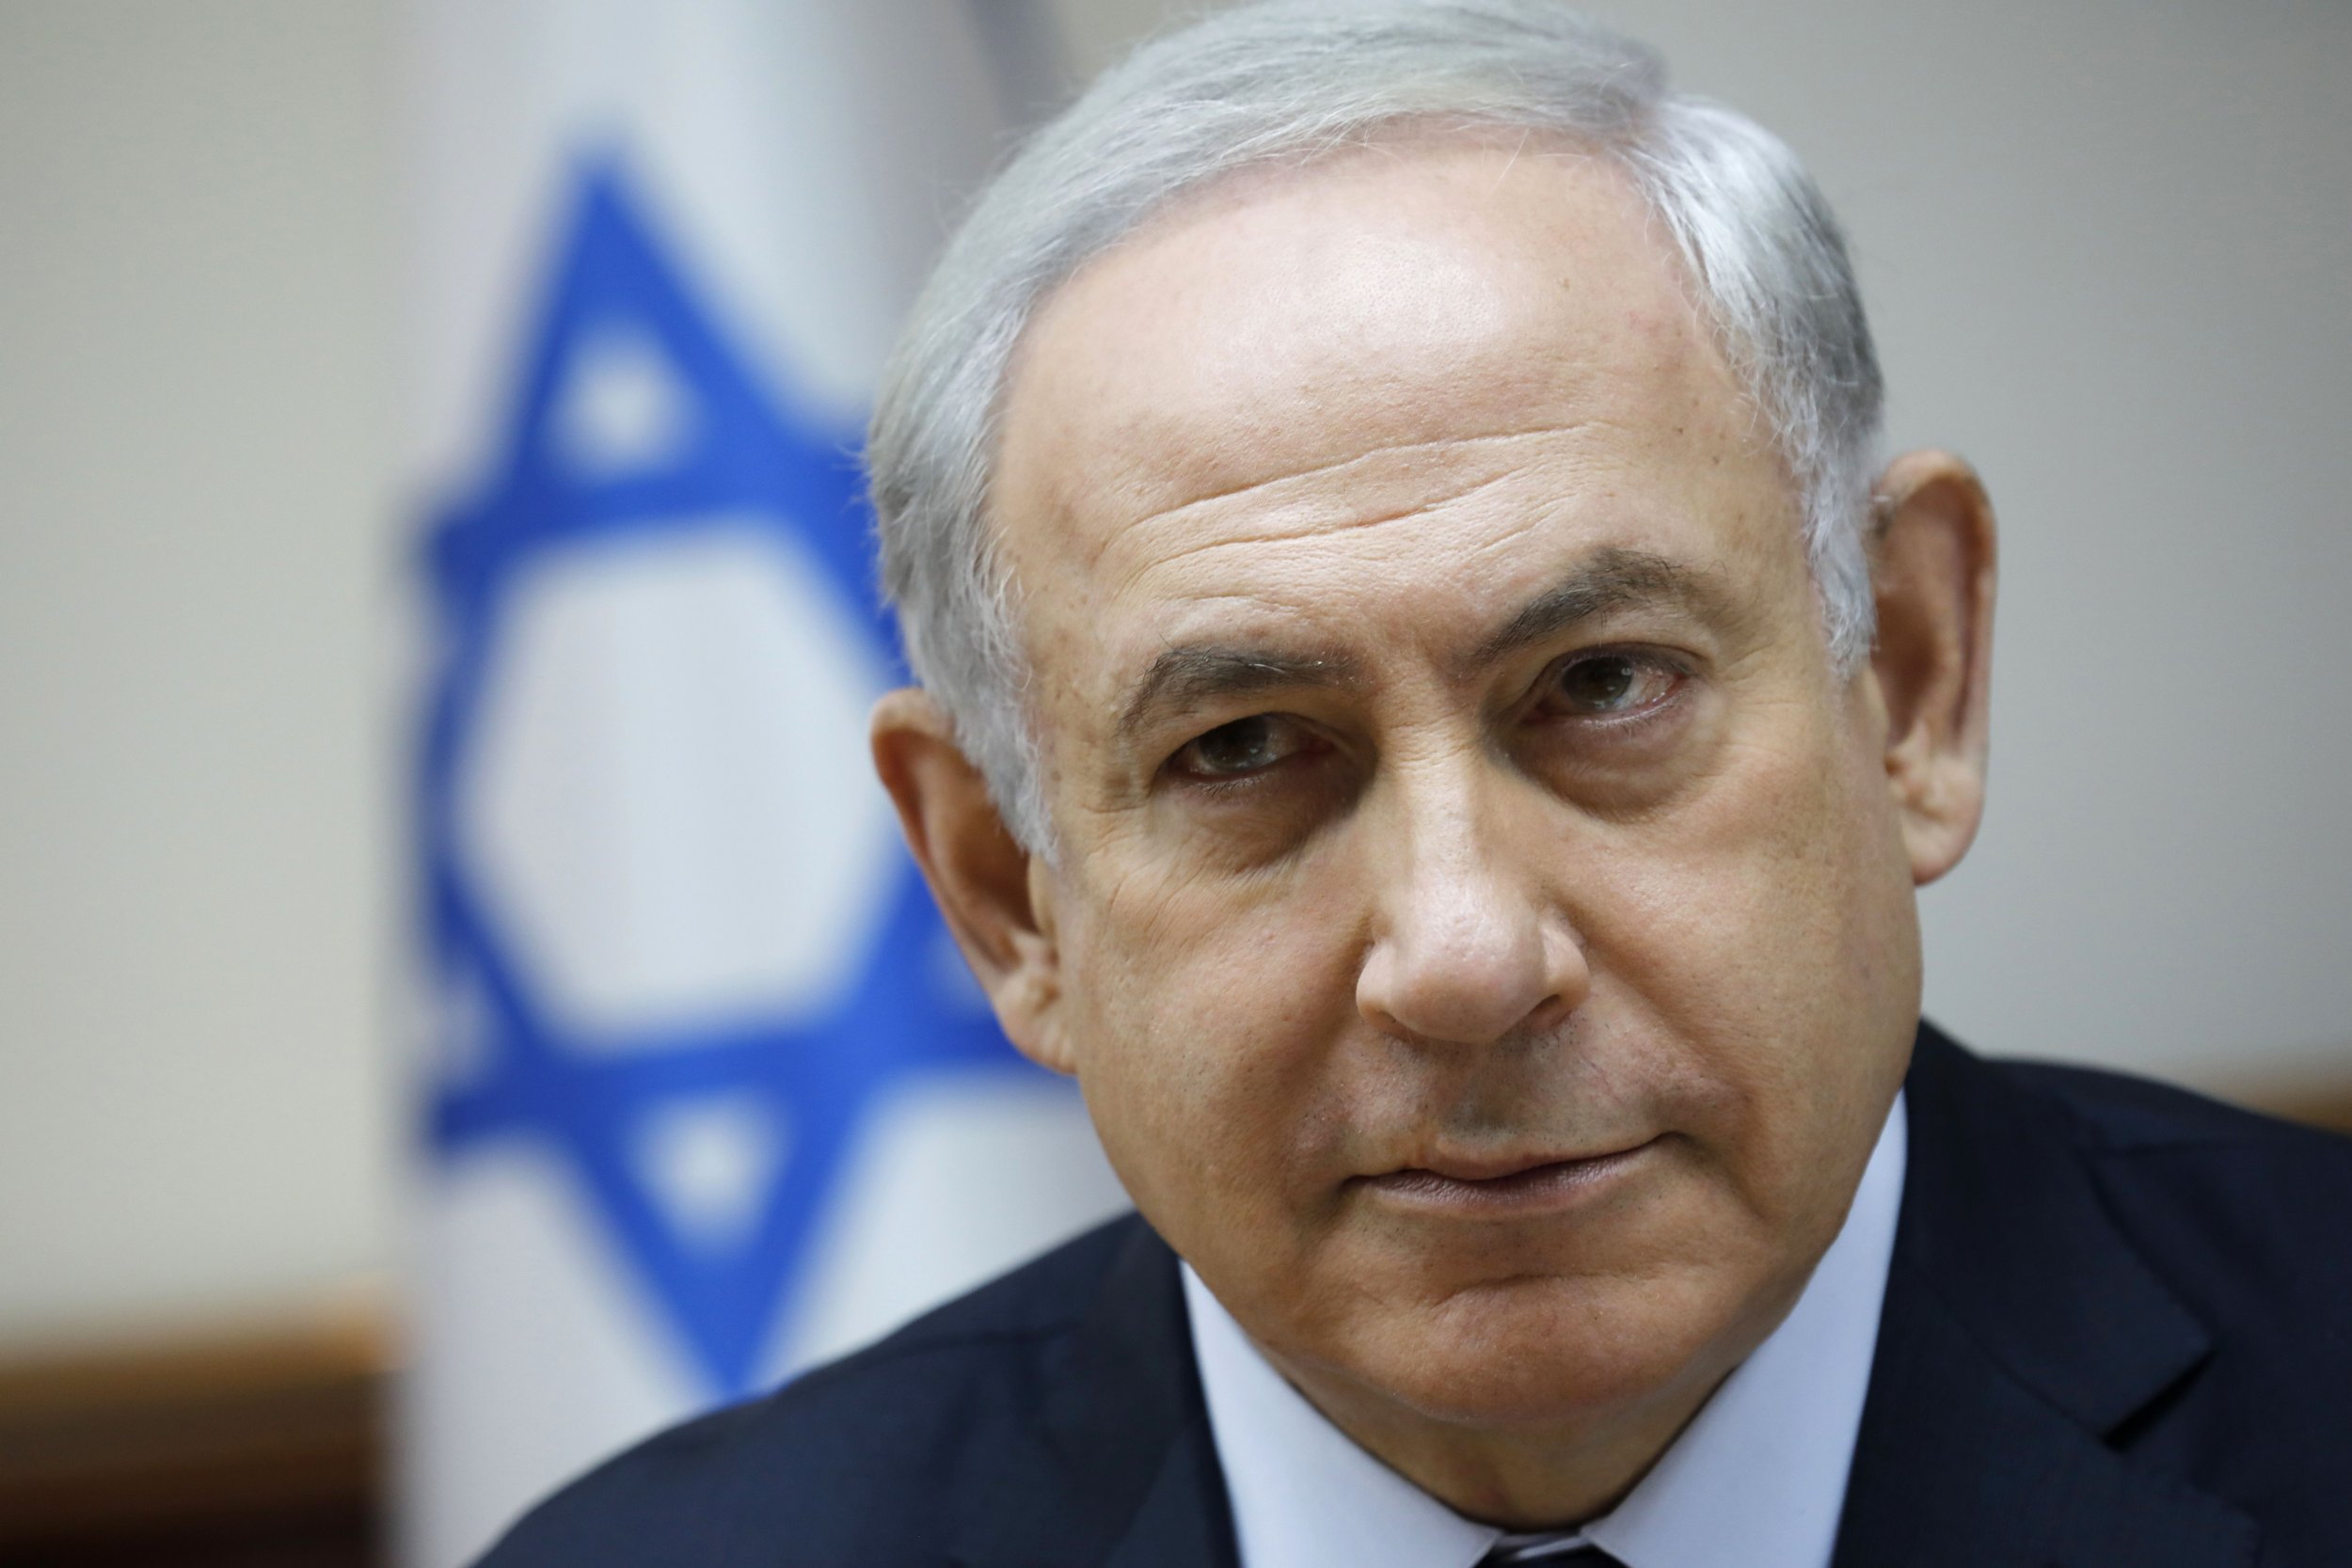 tel-aviv-diary-did-bibi-netanyahu-take-bribes